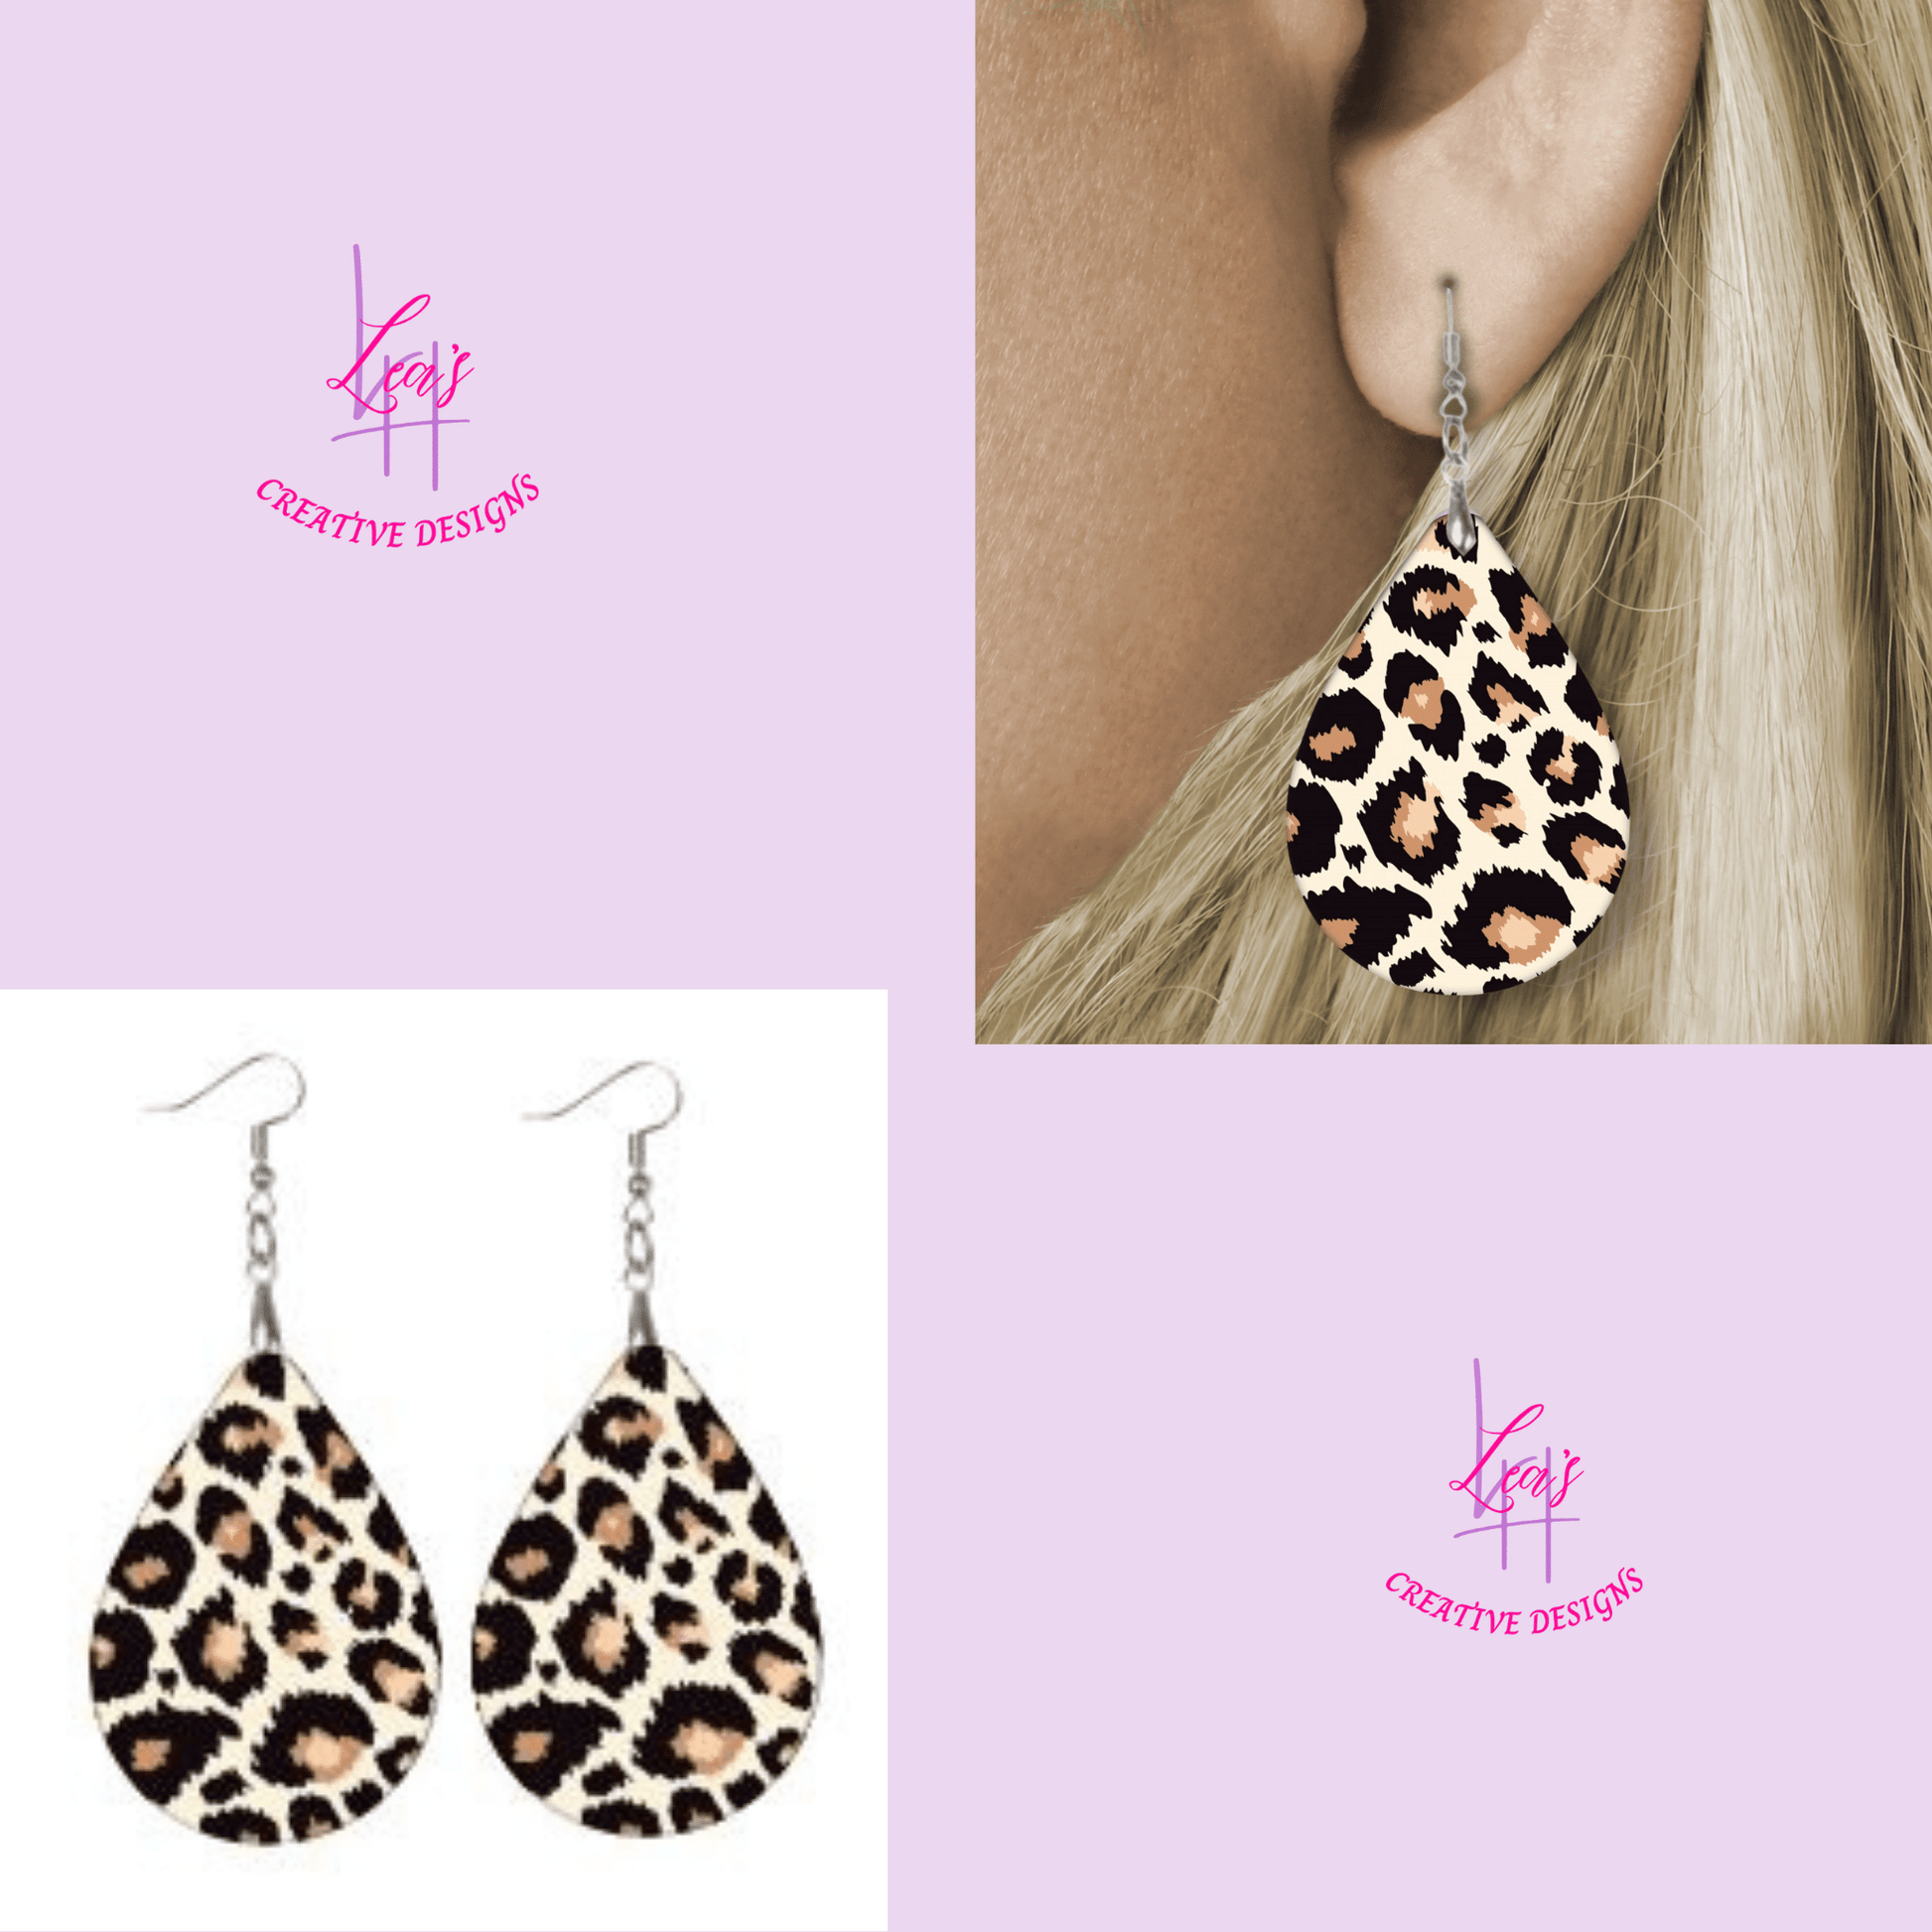 Lea's Creative Designs Earrings Leopard Print Black and Brown Teardrop Earrings